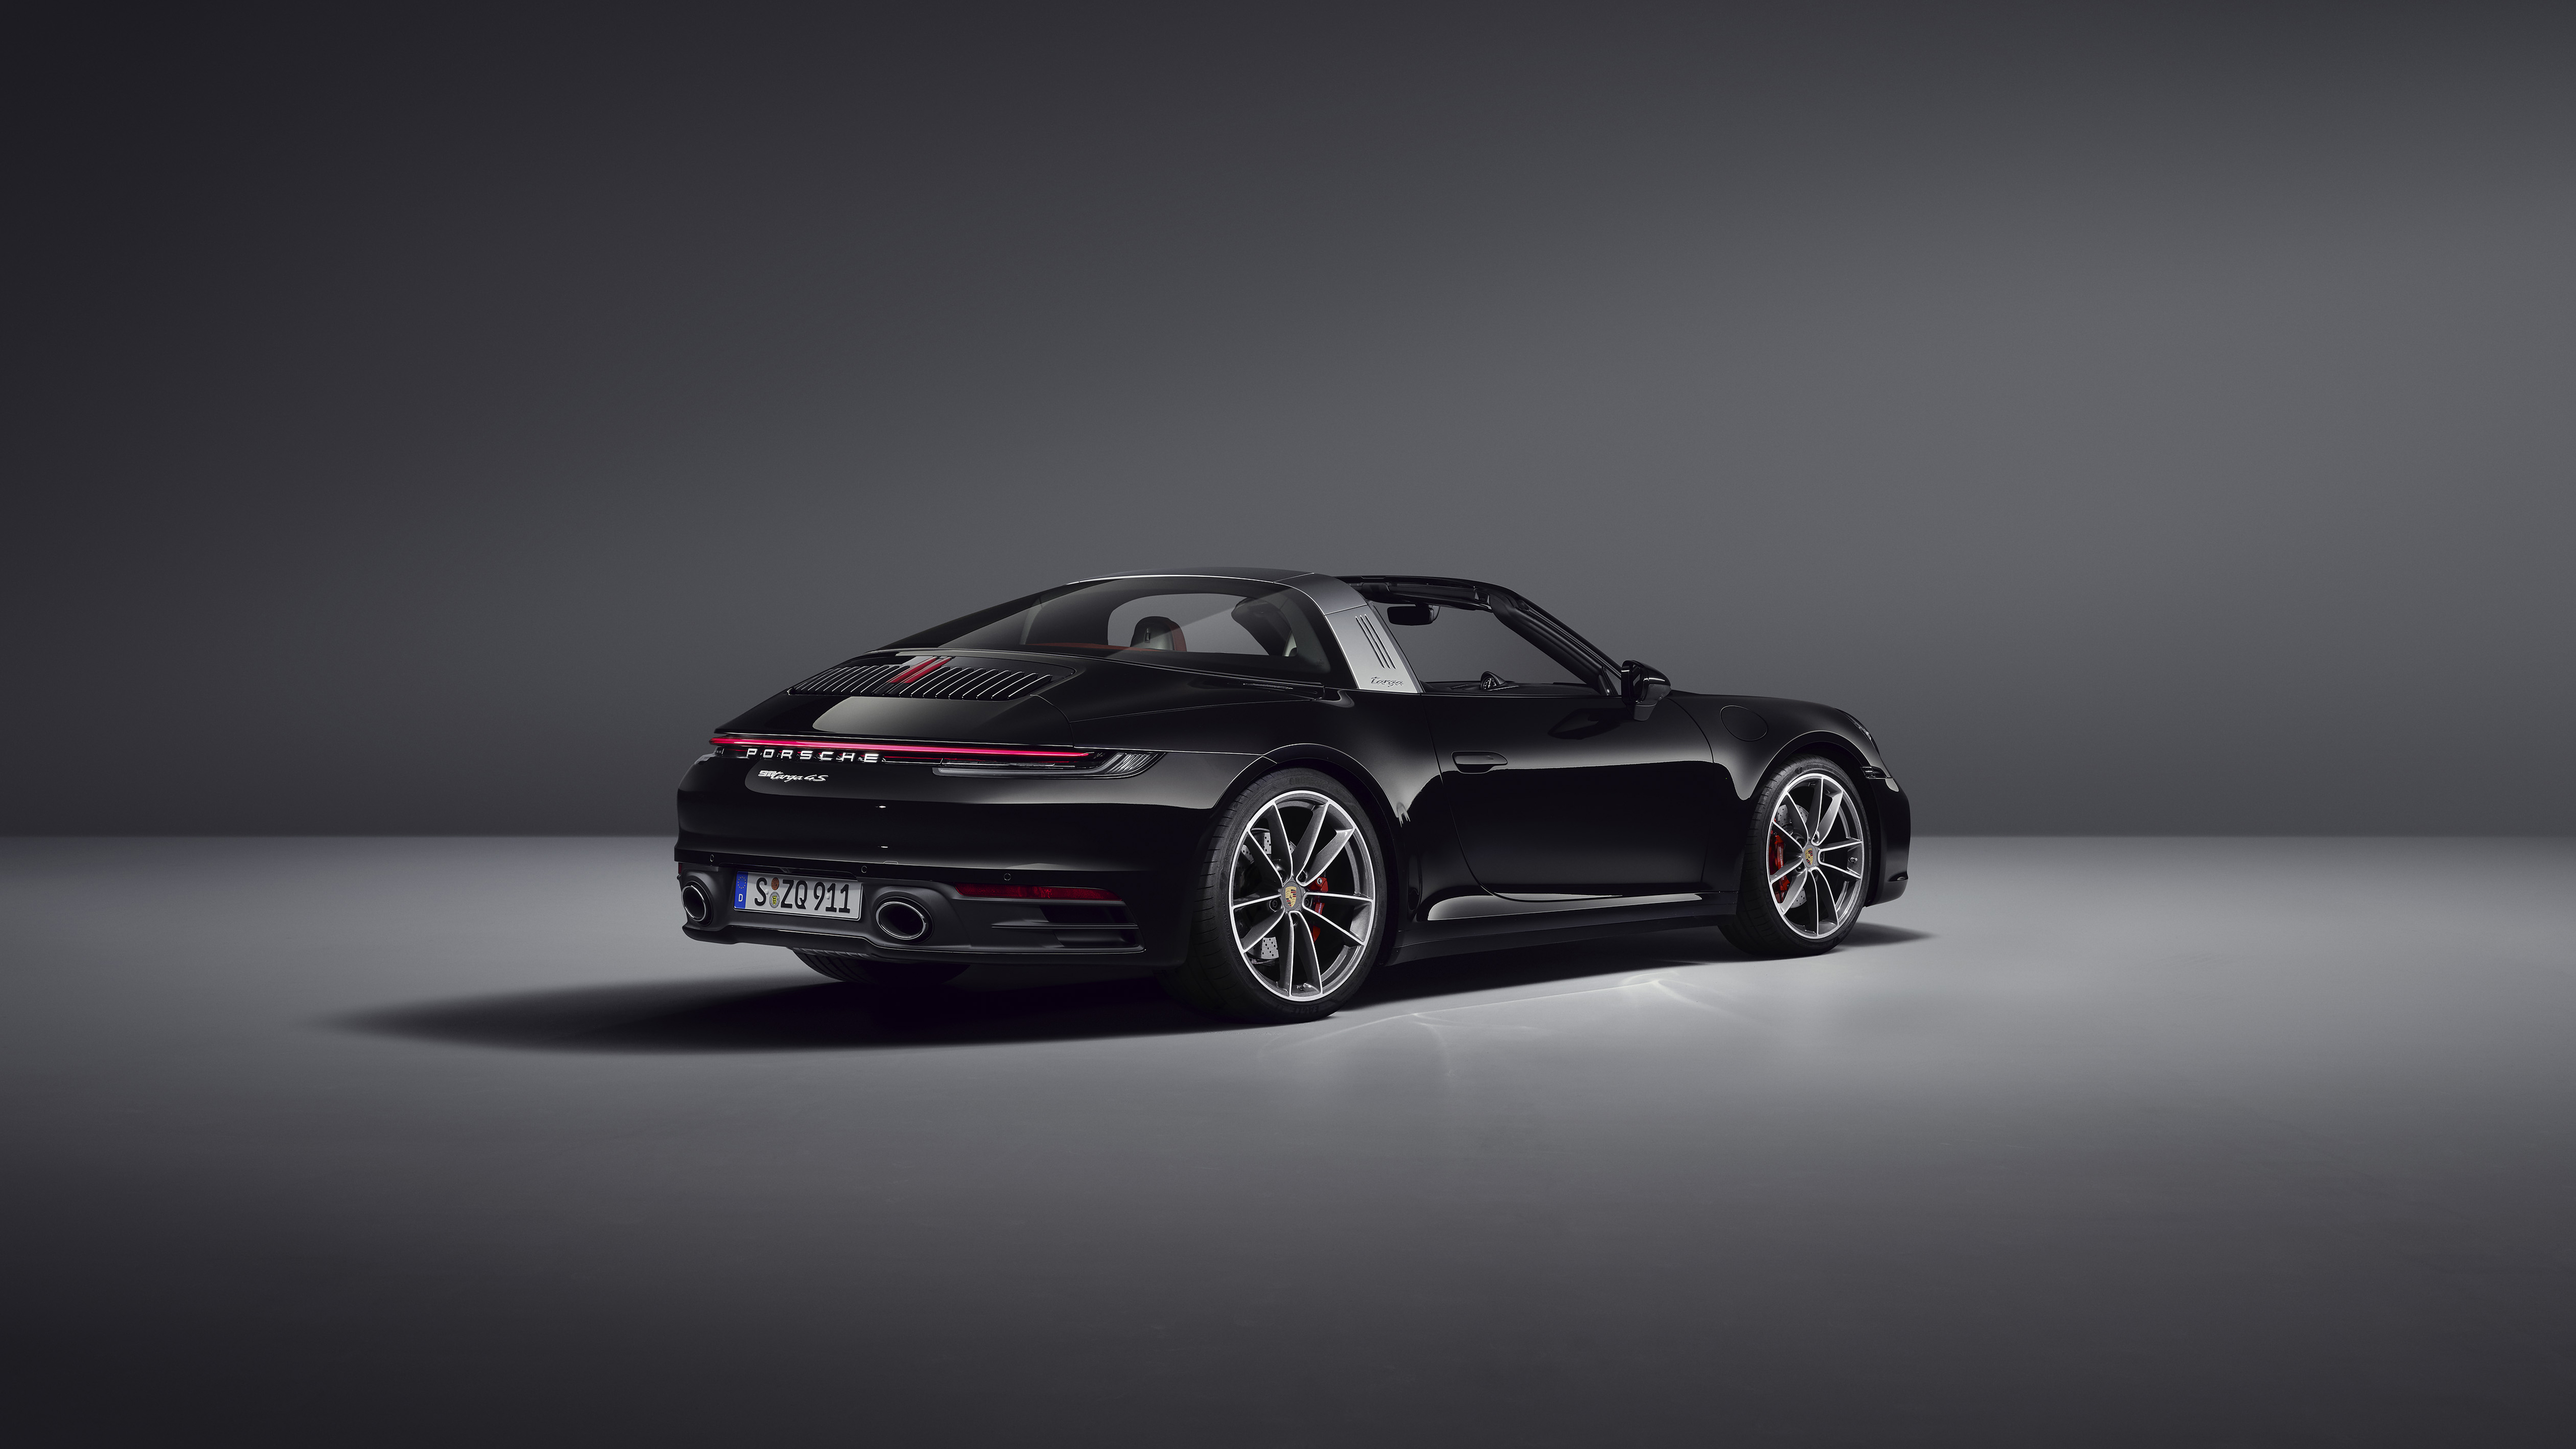 Porsche 911 Targa 4s 2020 5k 4 Wallpaper Hd Car Wallpapers Id 14846